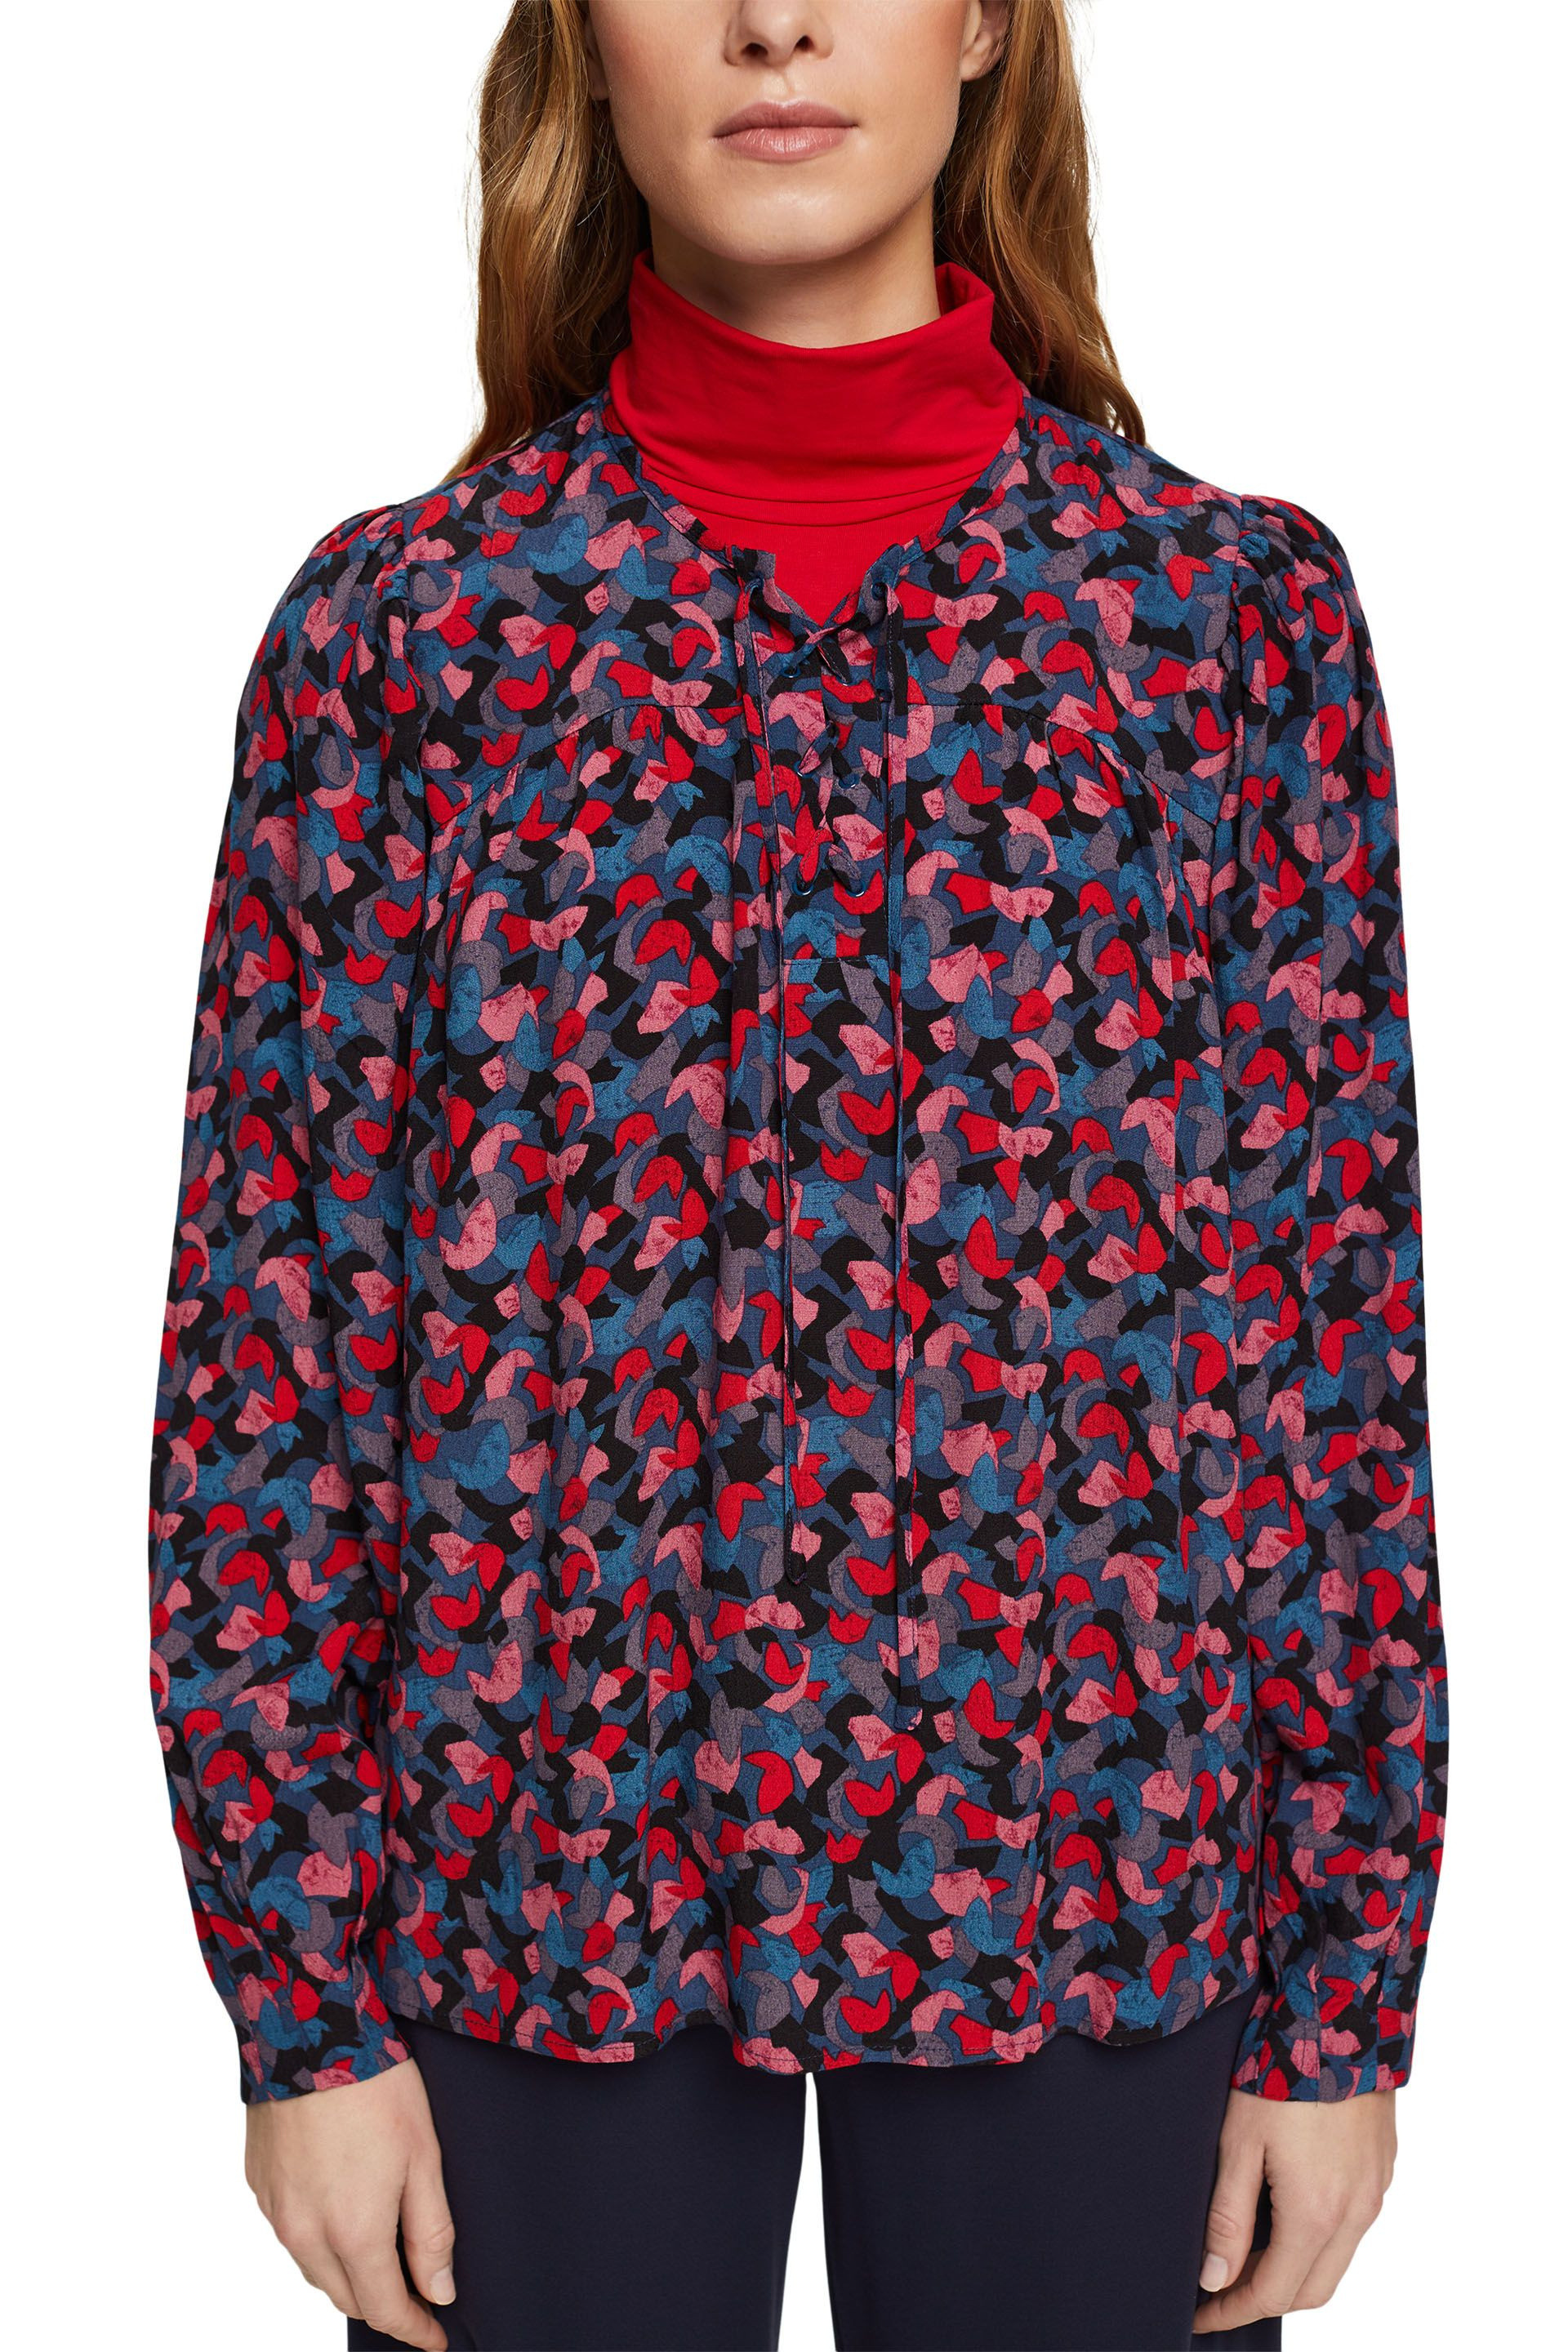 Esprit - Patterned blouse, Multicolor, large image number 1